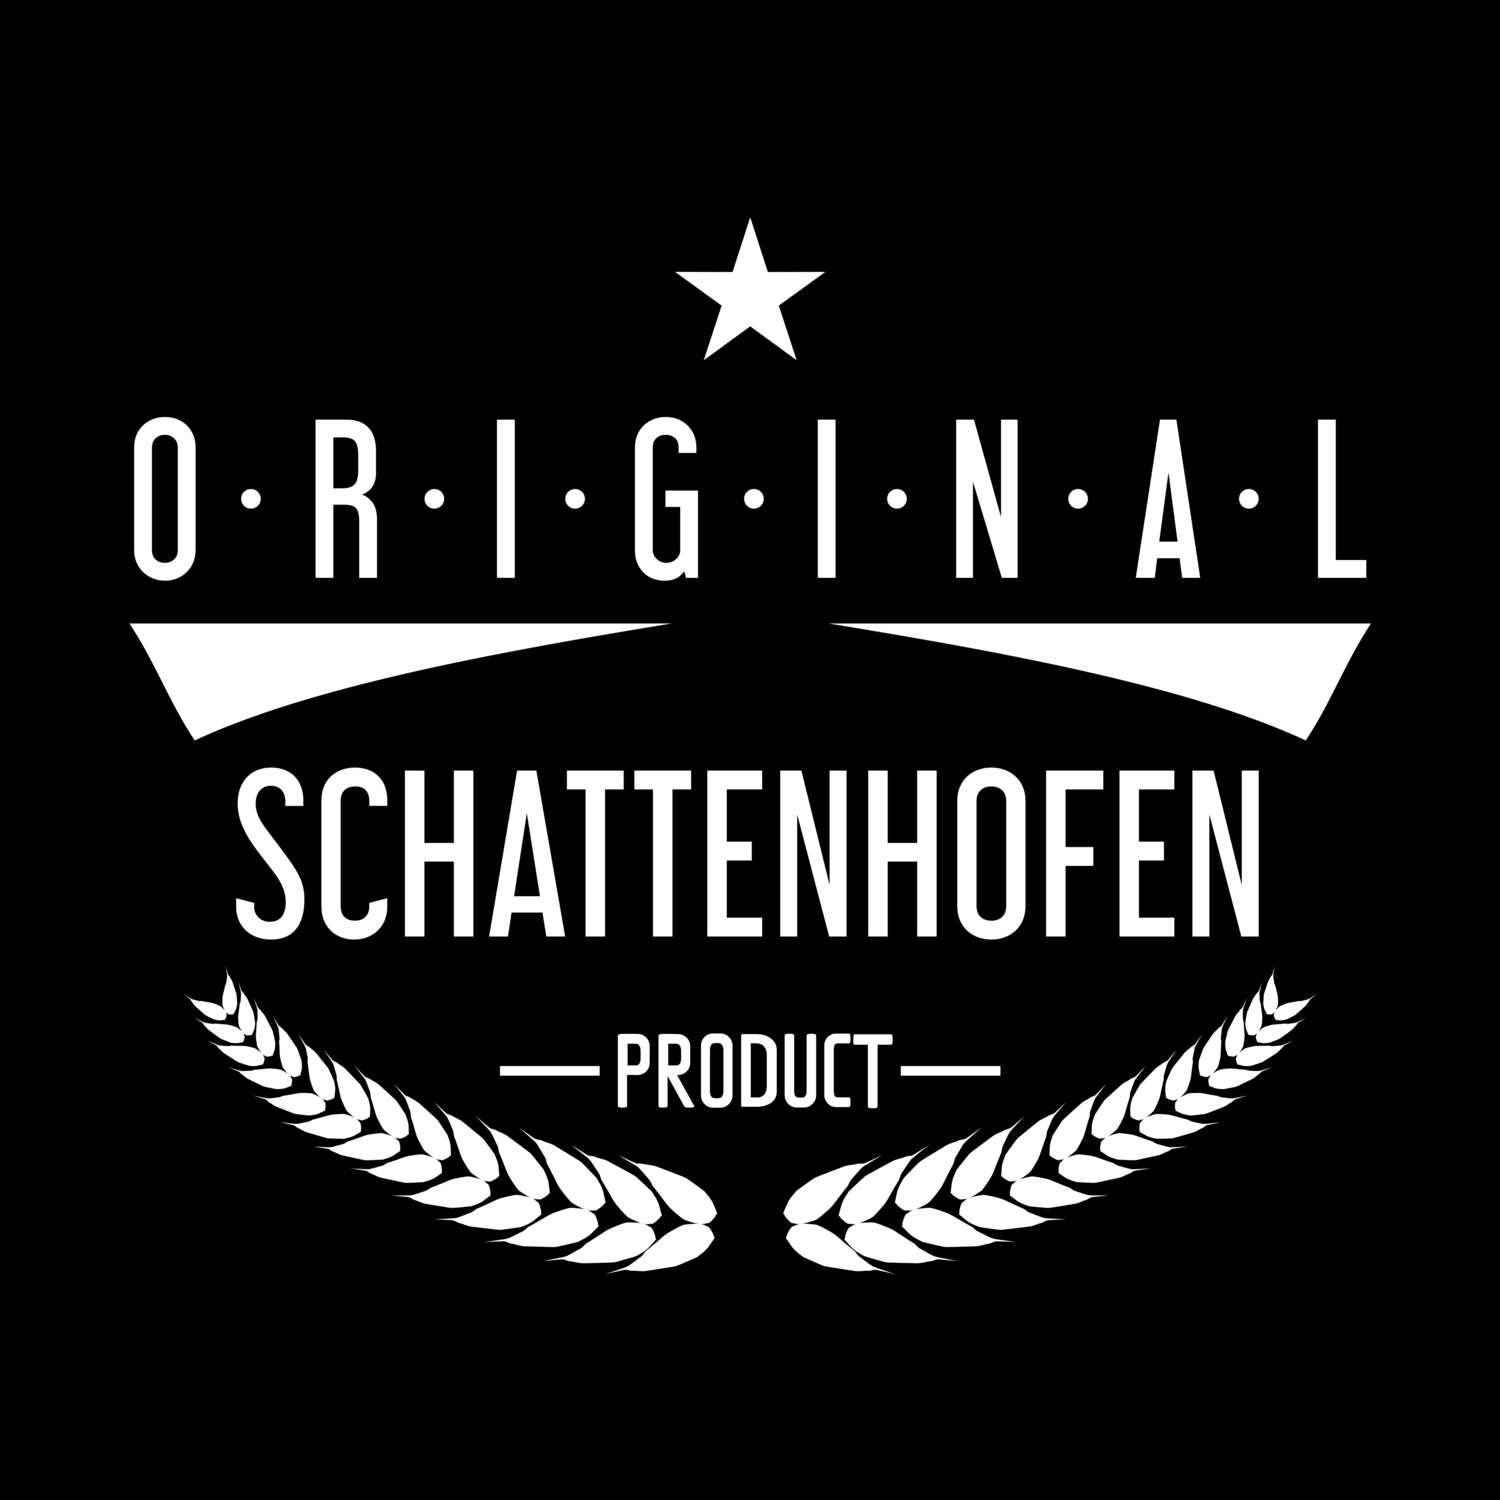 Schattenhofen T-Shirt »Original Product«